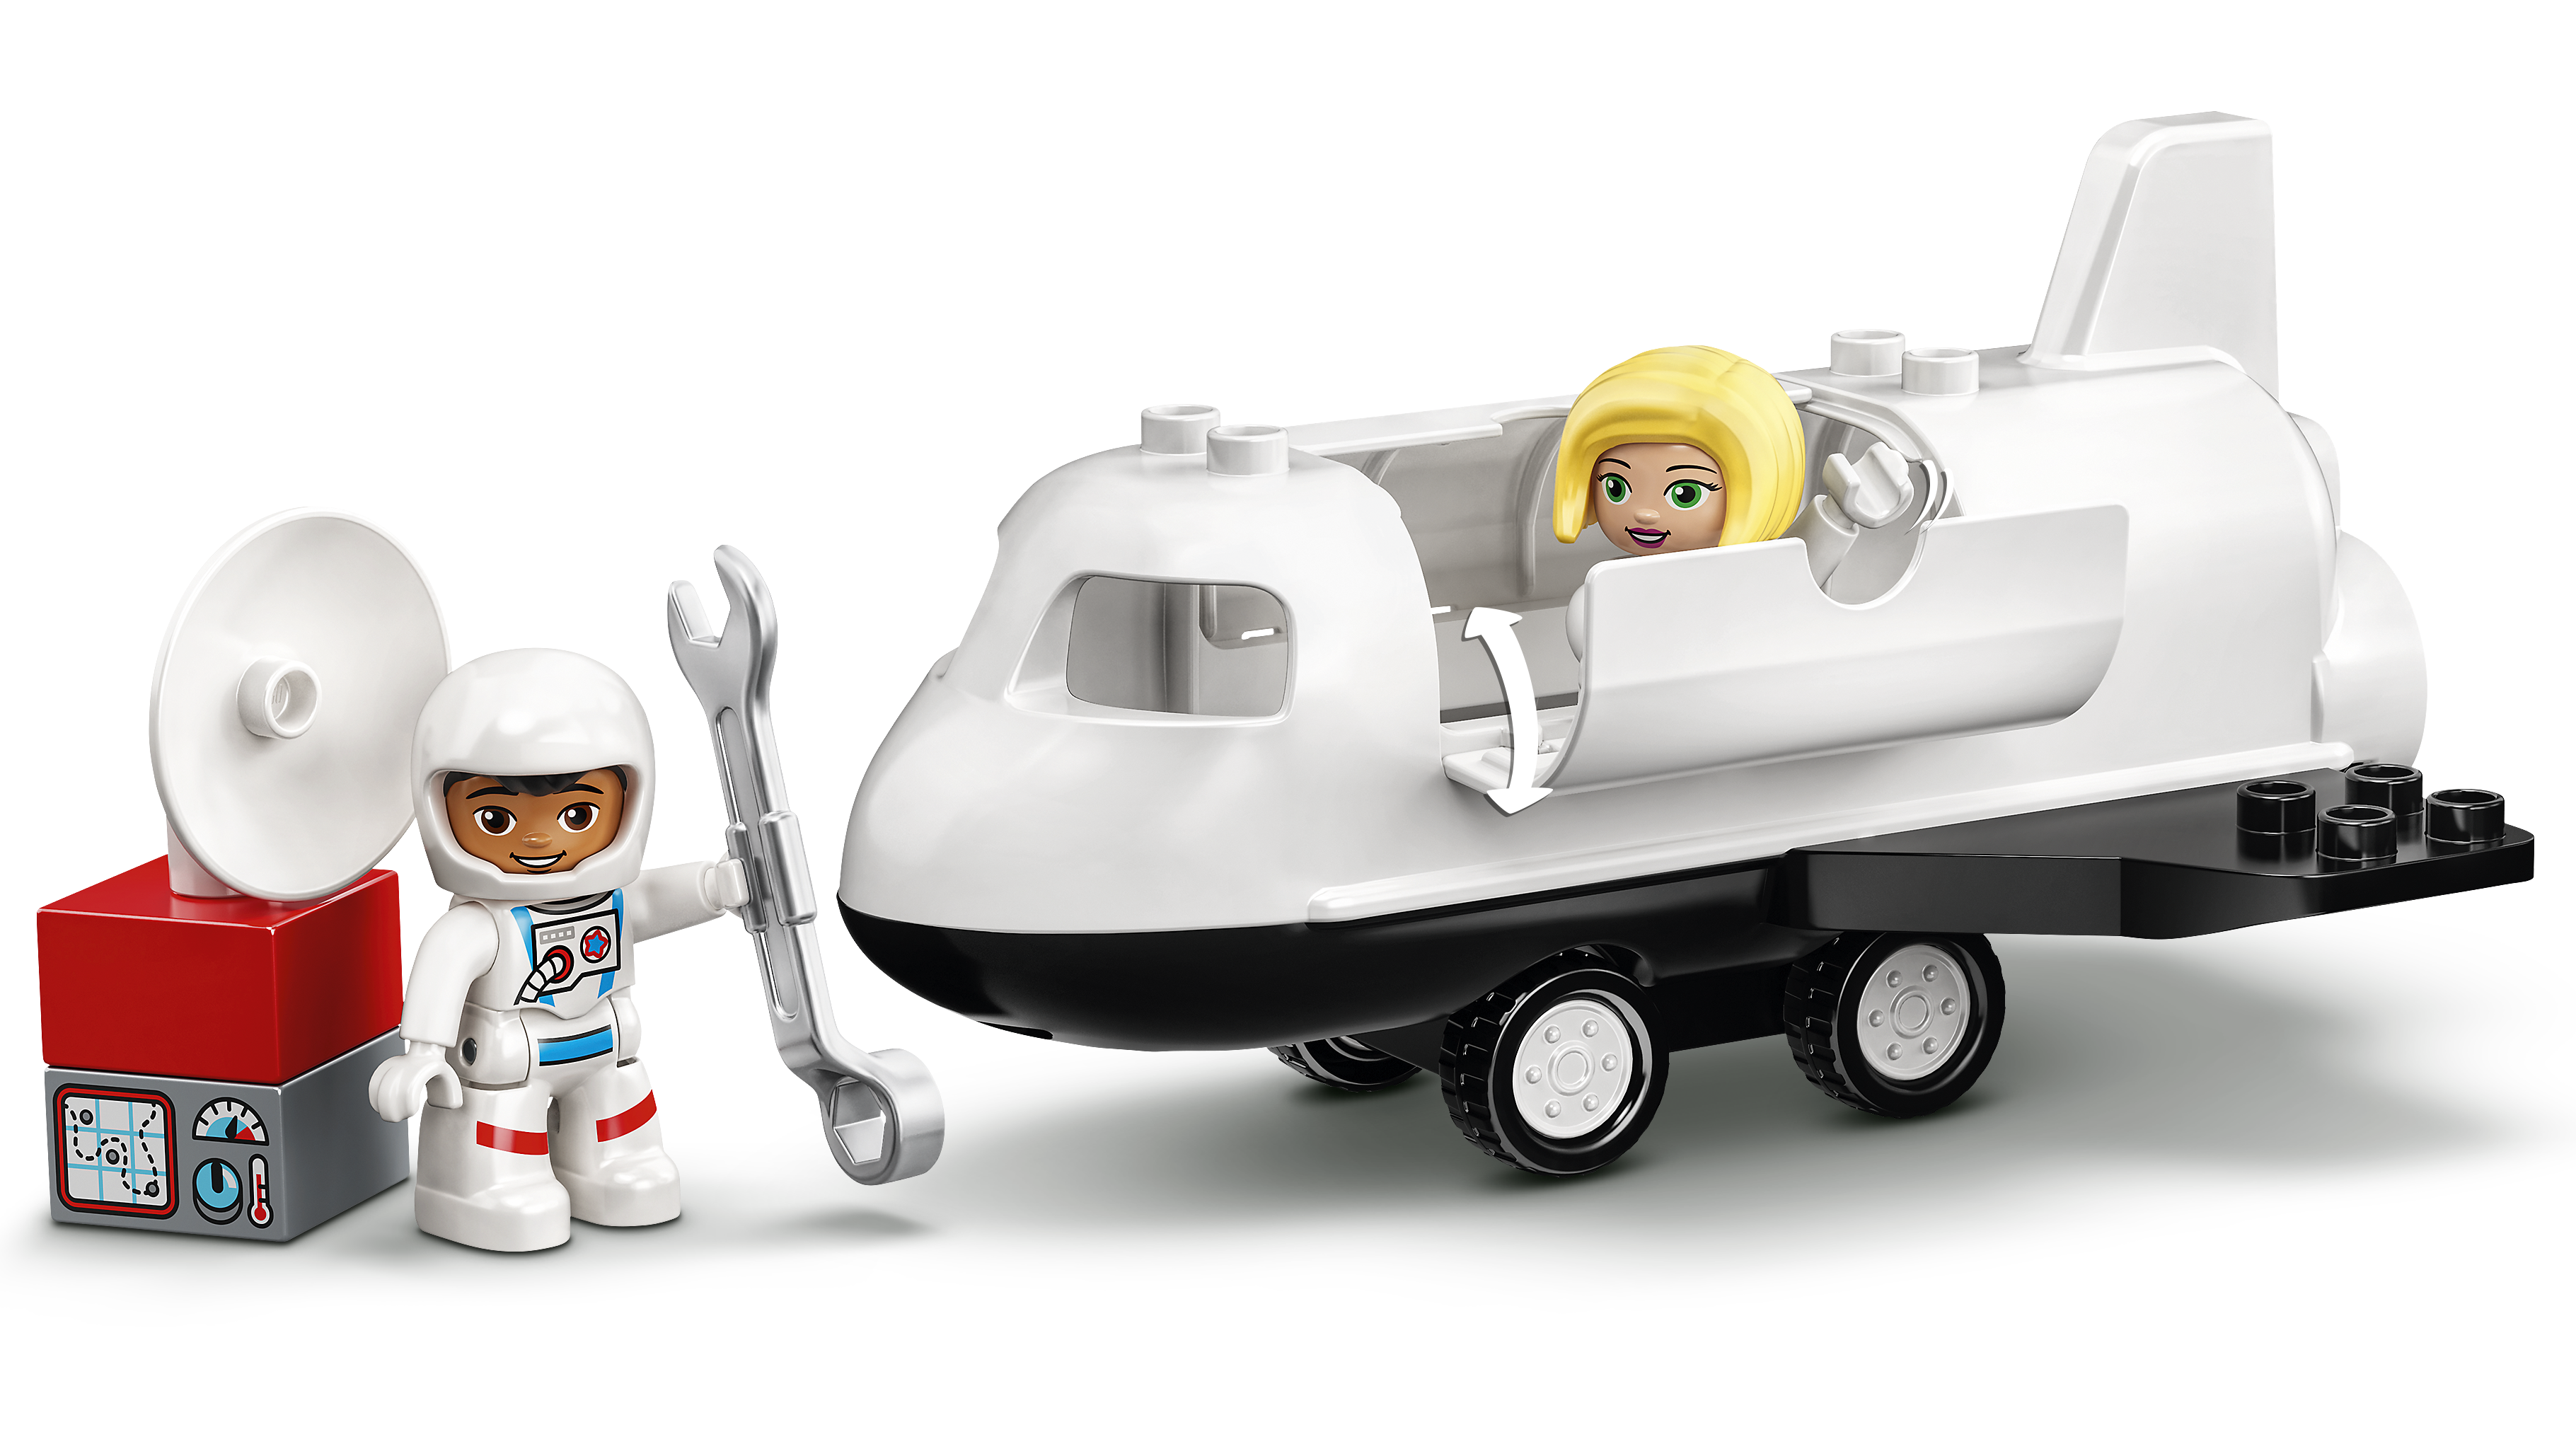 LEGO - Space - 442 452 6841 6880 6890 6927 - Spaceship - 1980-1989